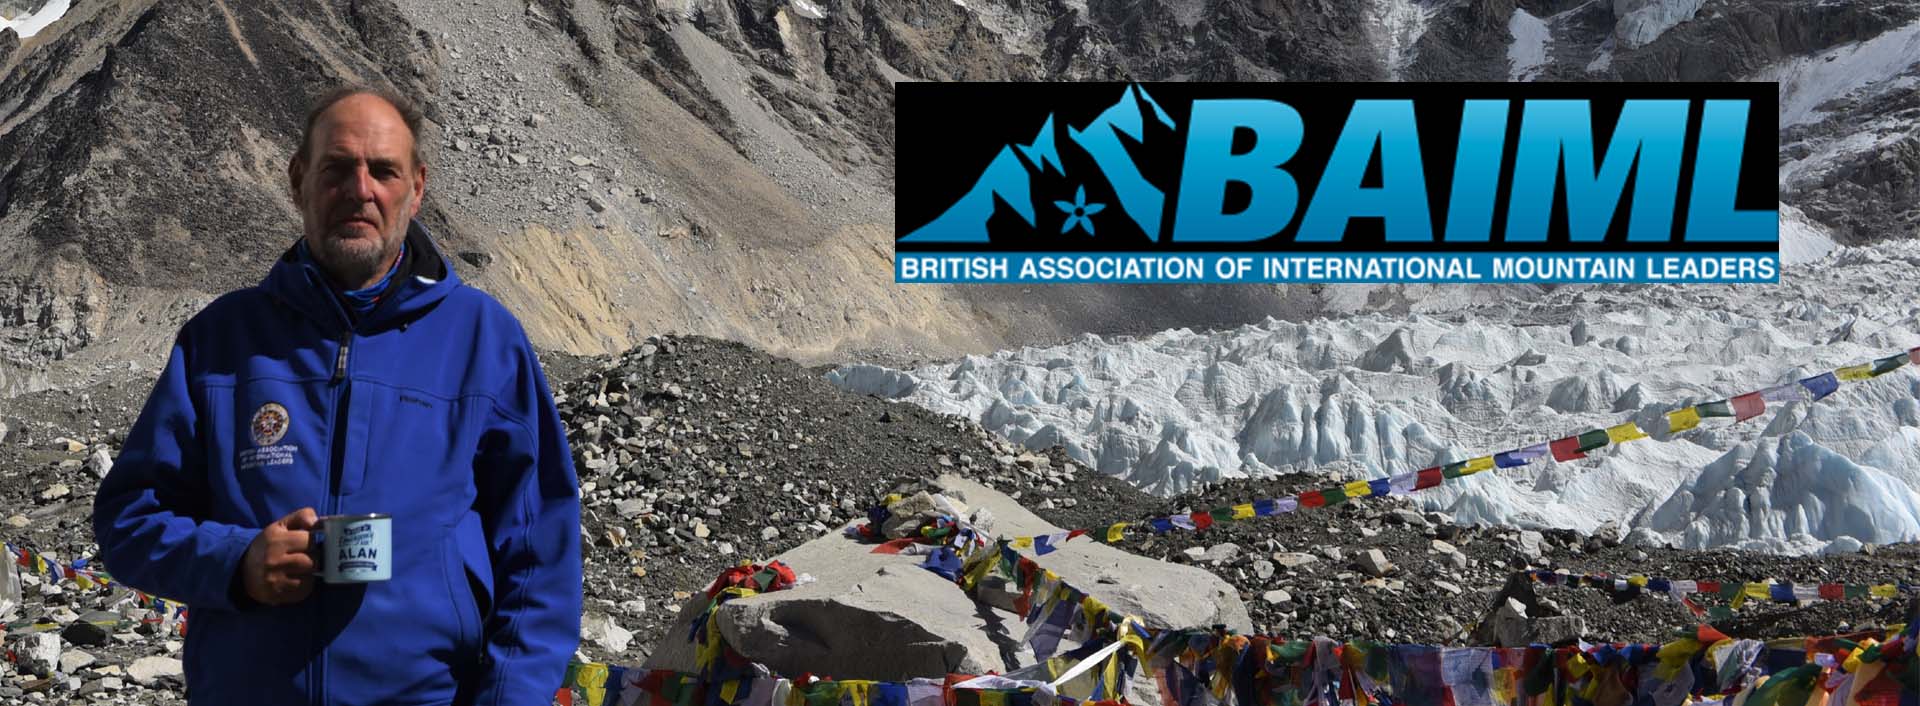 Alan Ward with british association of international mountain leaders logo